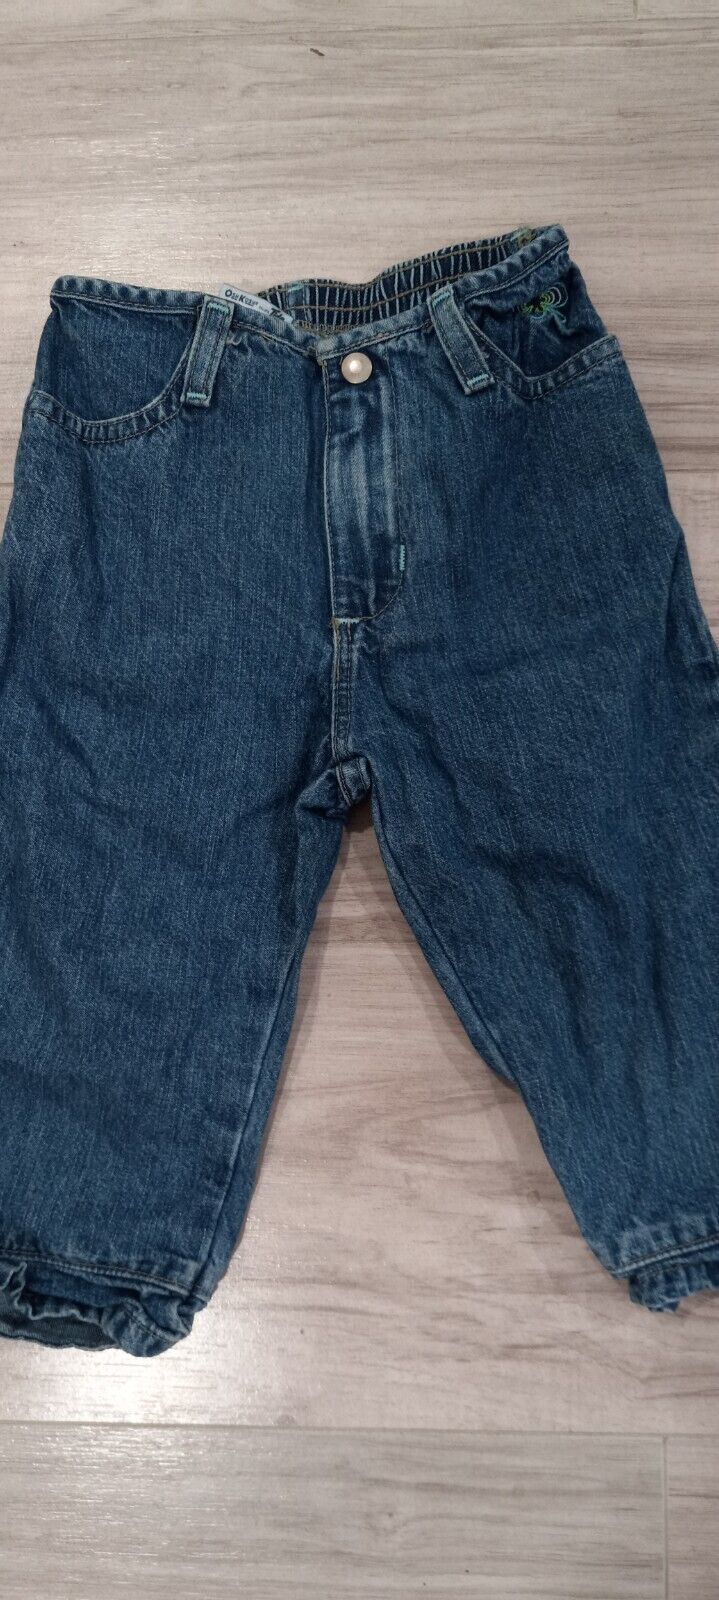 Osh Kosh Bgosh Girls Jeans Toddler Size 4T Spring Flower - $9.99